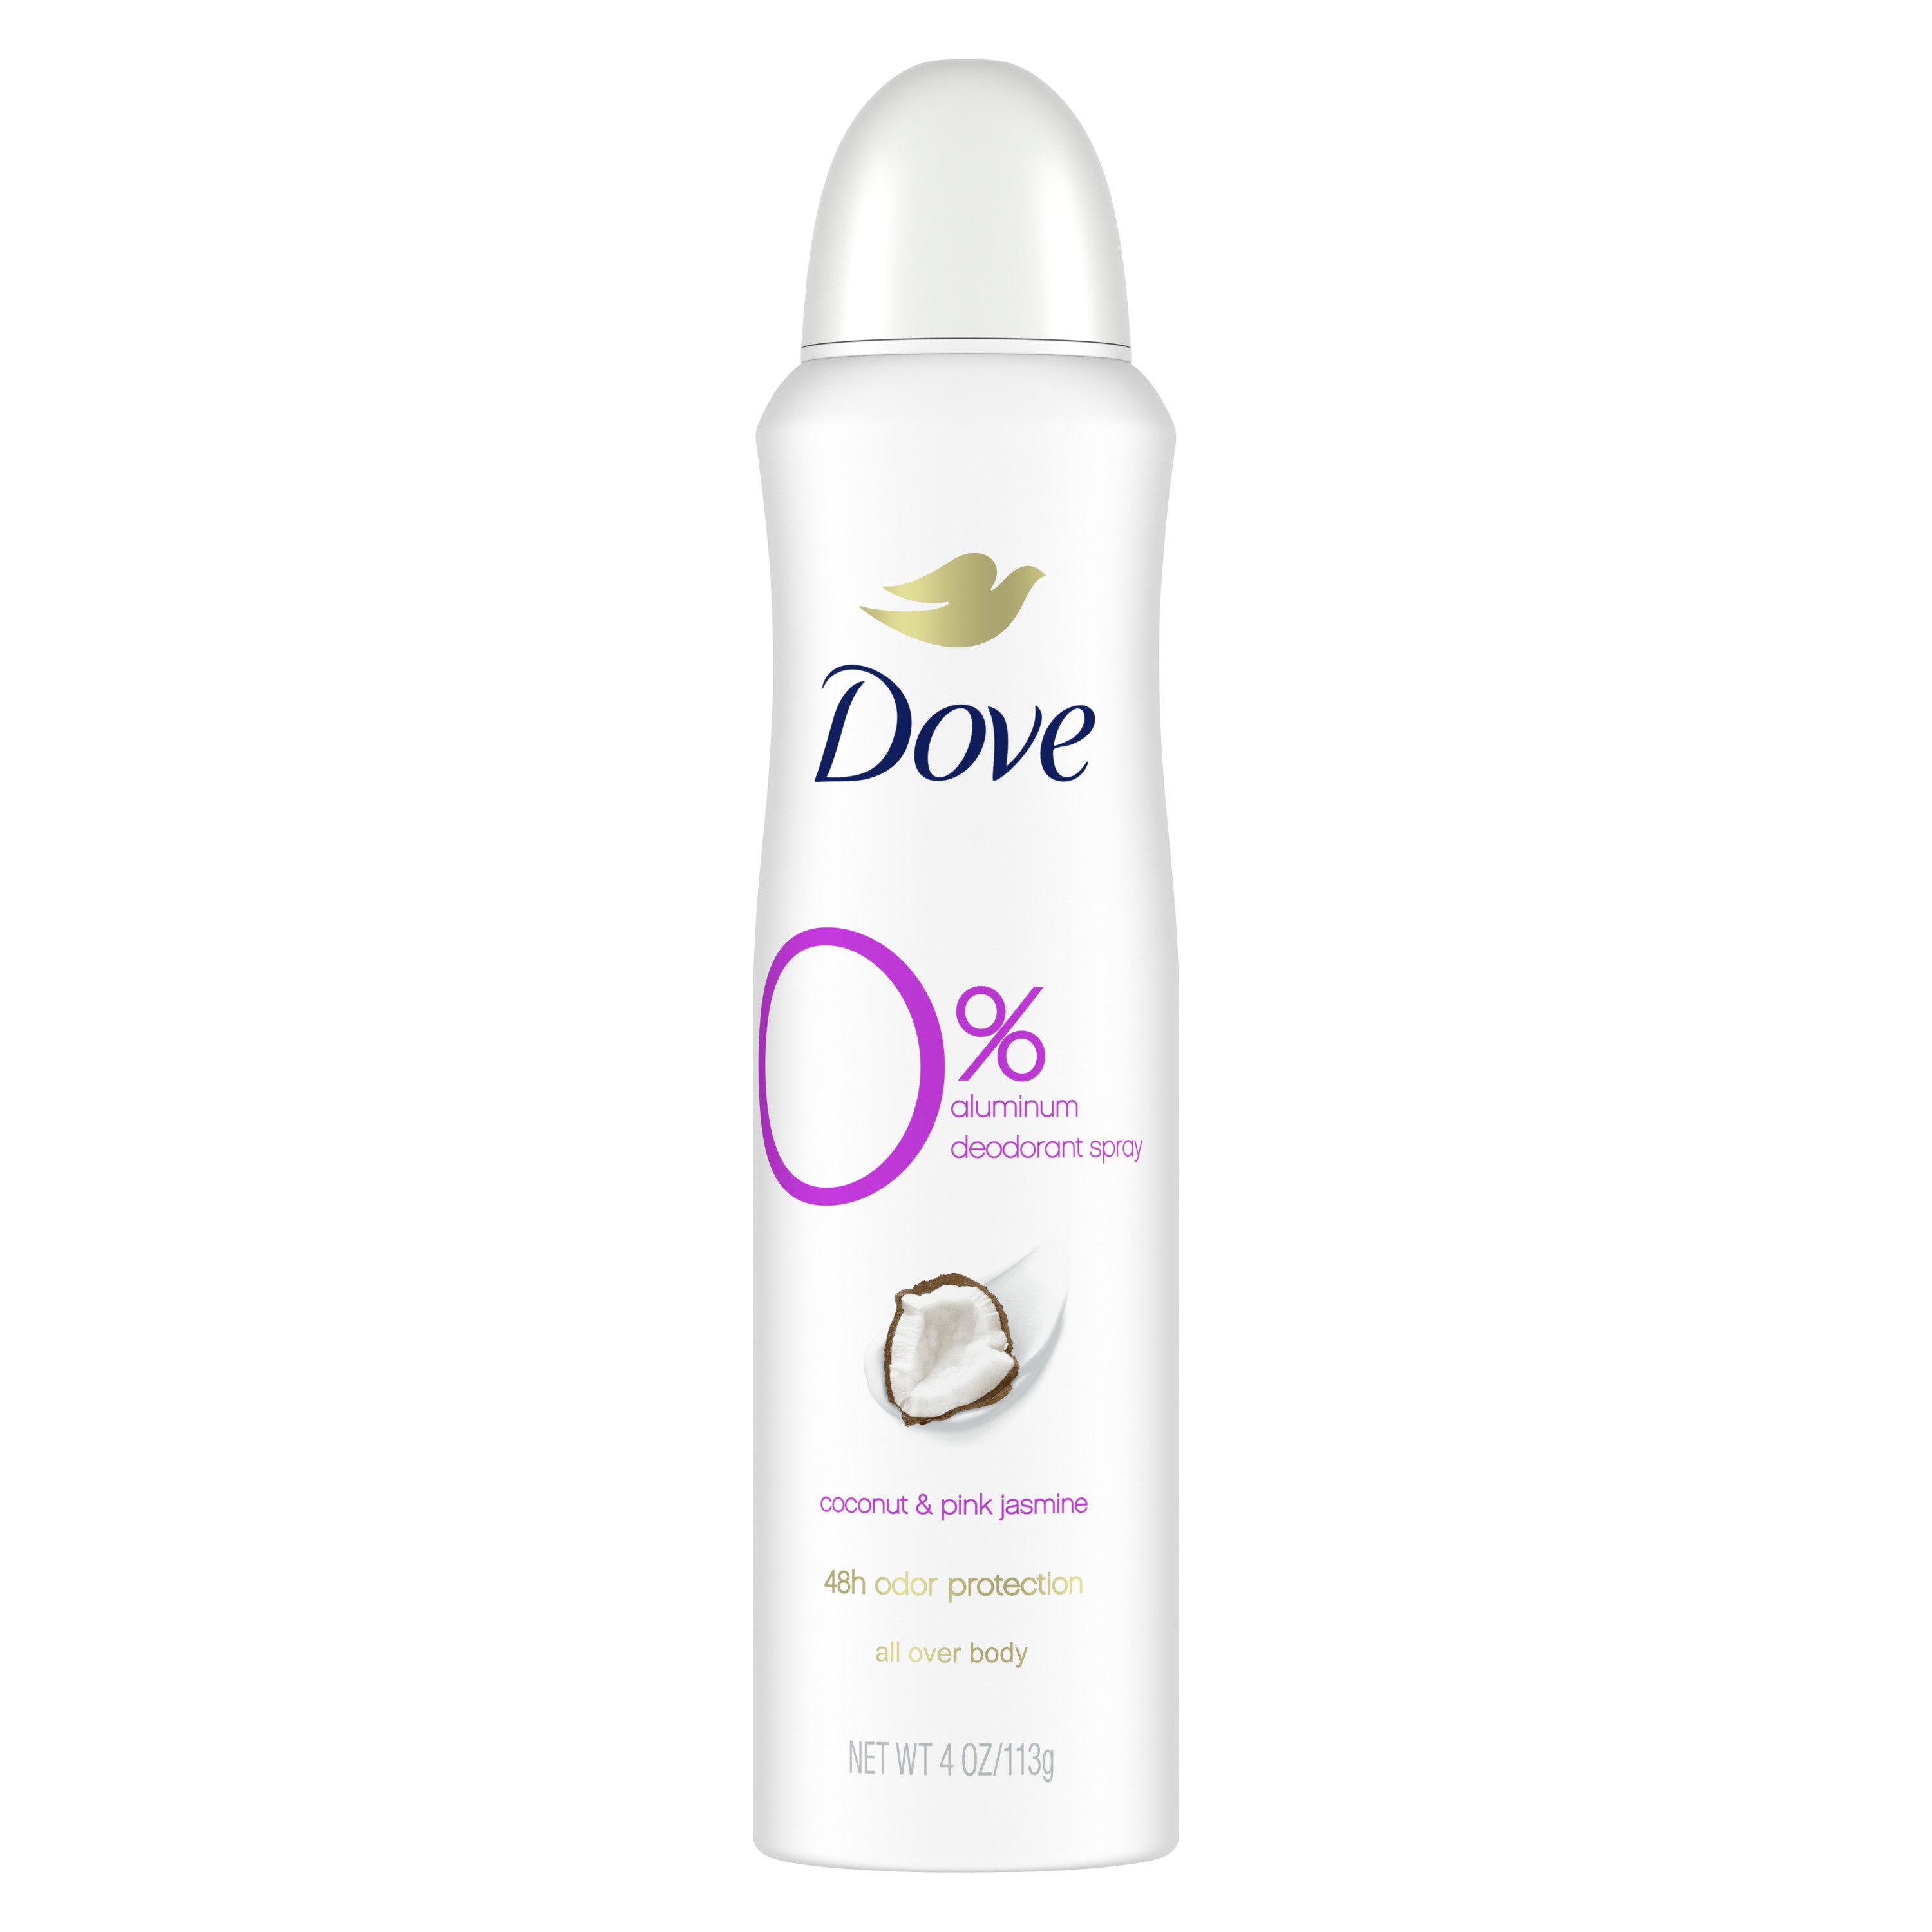 Dove Free Deodorant Spray - Coconut & Pink - Shop Deodorant & Antiperspirant at H-E-B